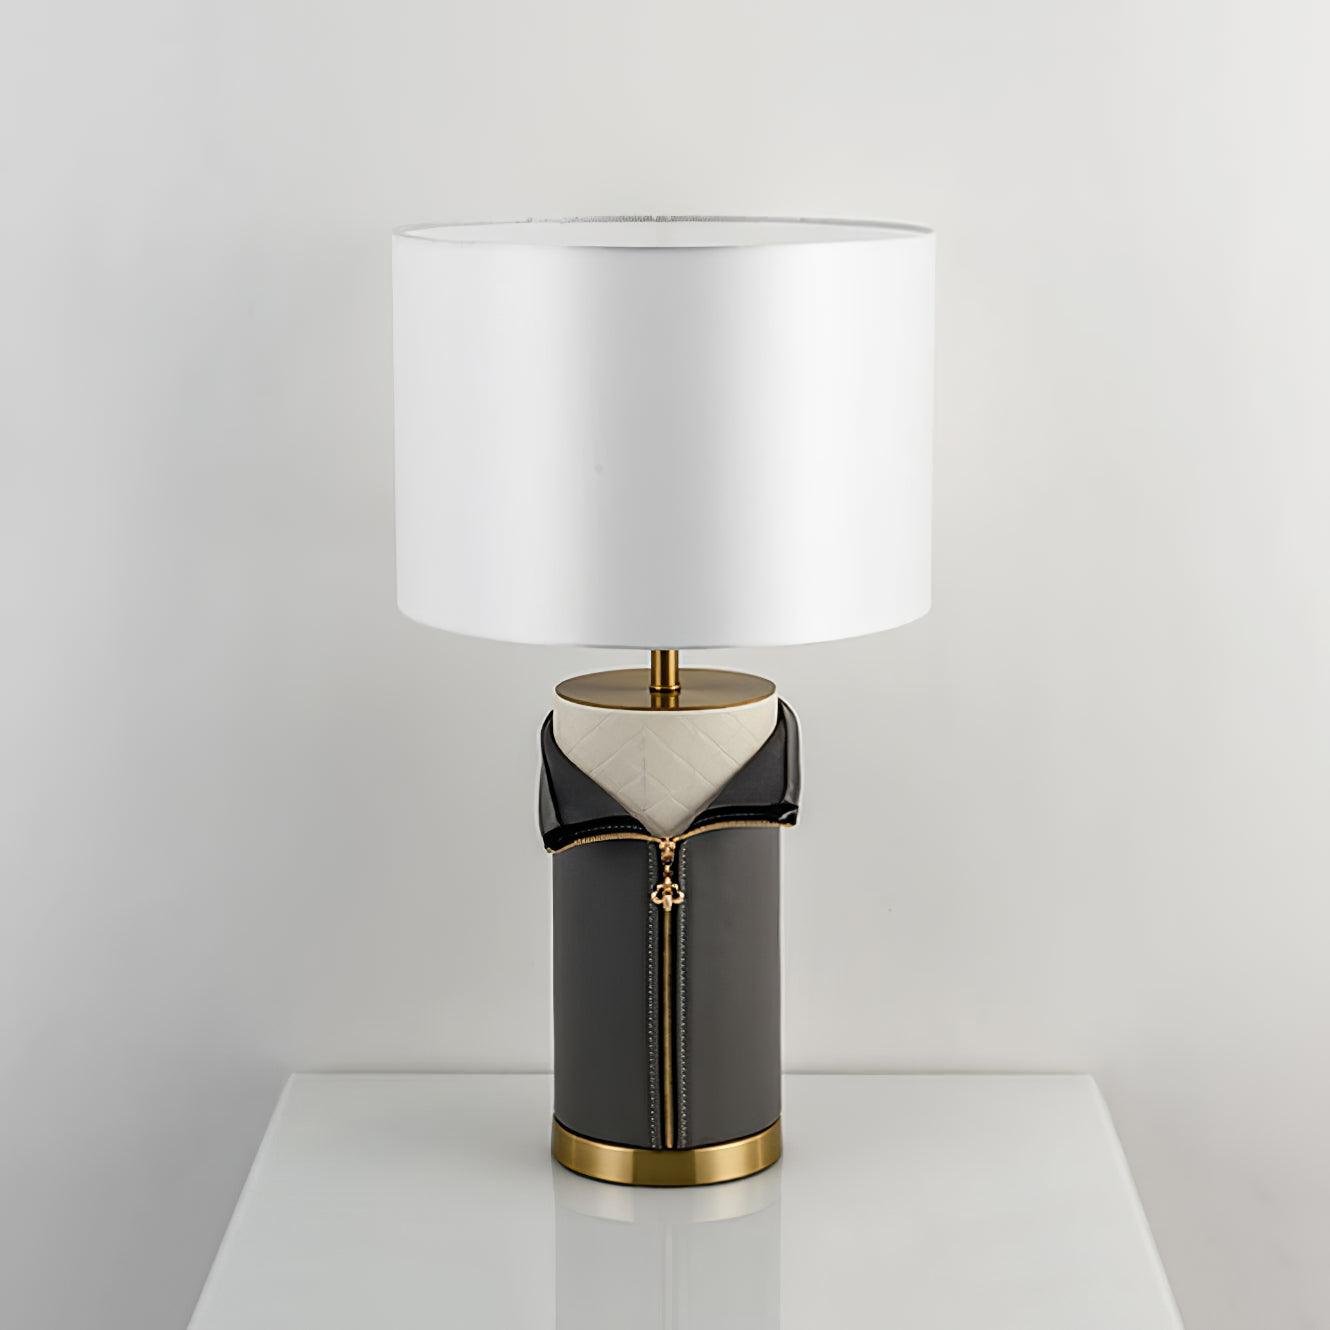 UK Plug Vintage Leather Table Lamp, Grey+White, Diameter 14.2″ x Height 25.6″ (36cm x 65cm)